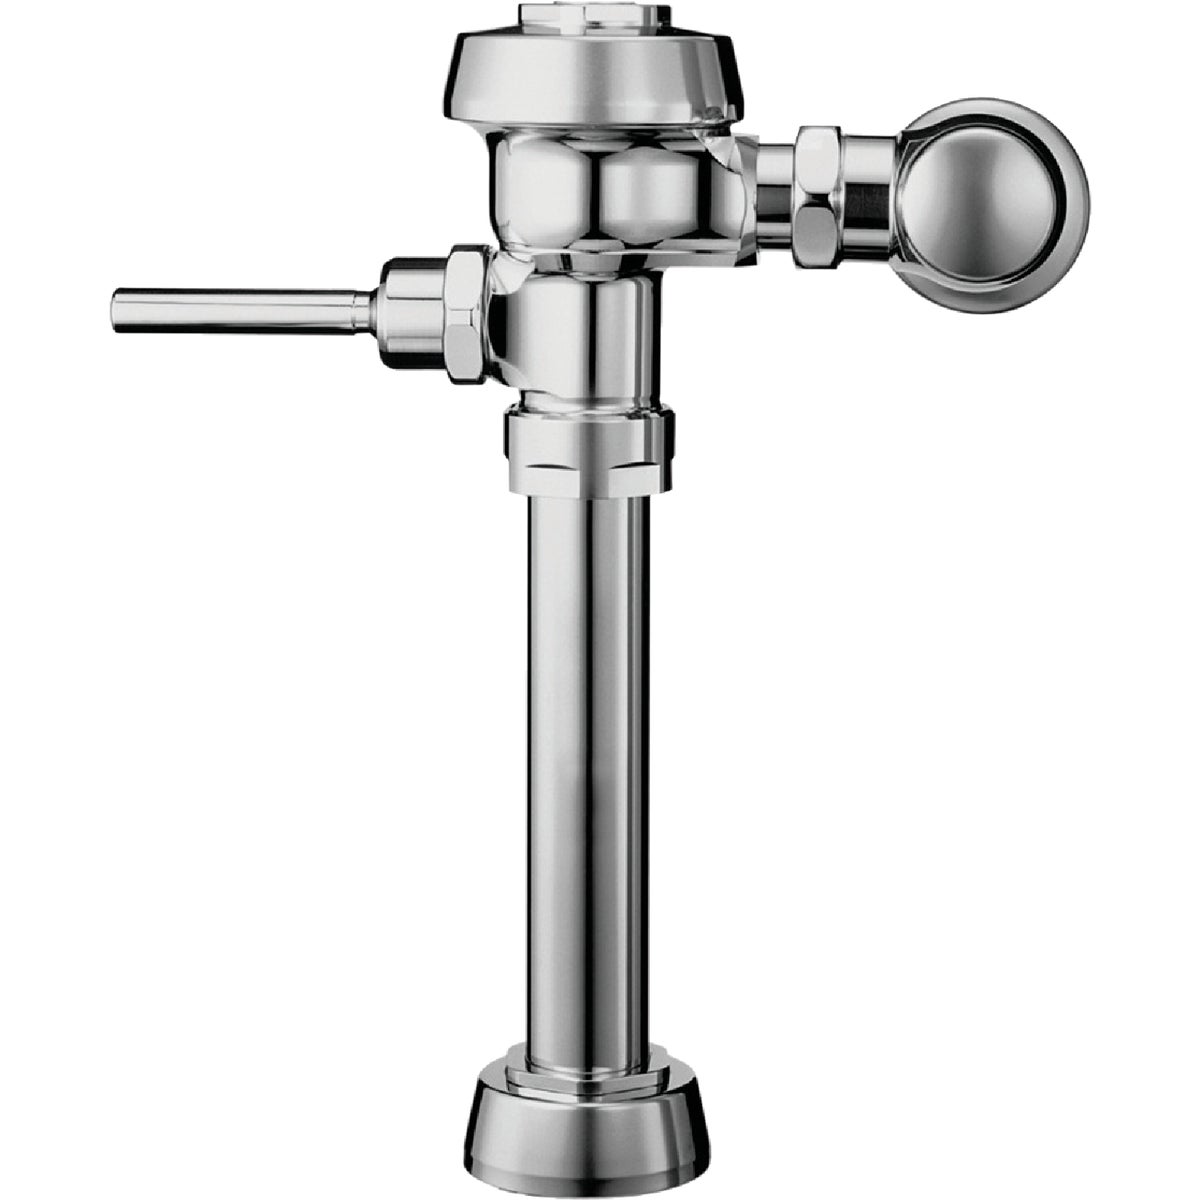 Item 464269, Sloan flush valve Model 111 closet valve, Royal Series, for low consumption